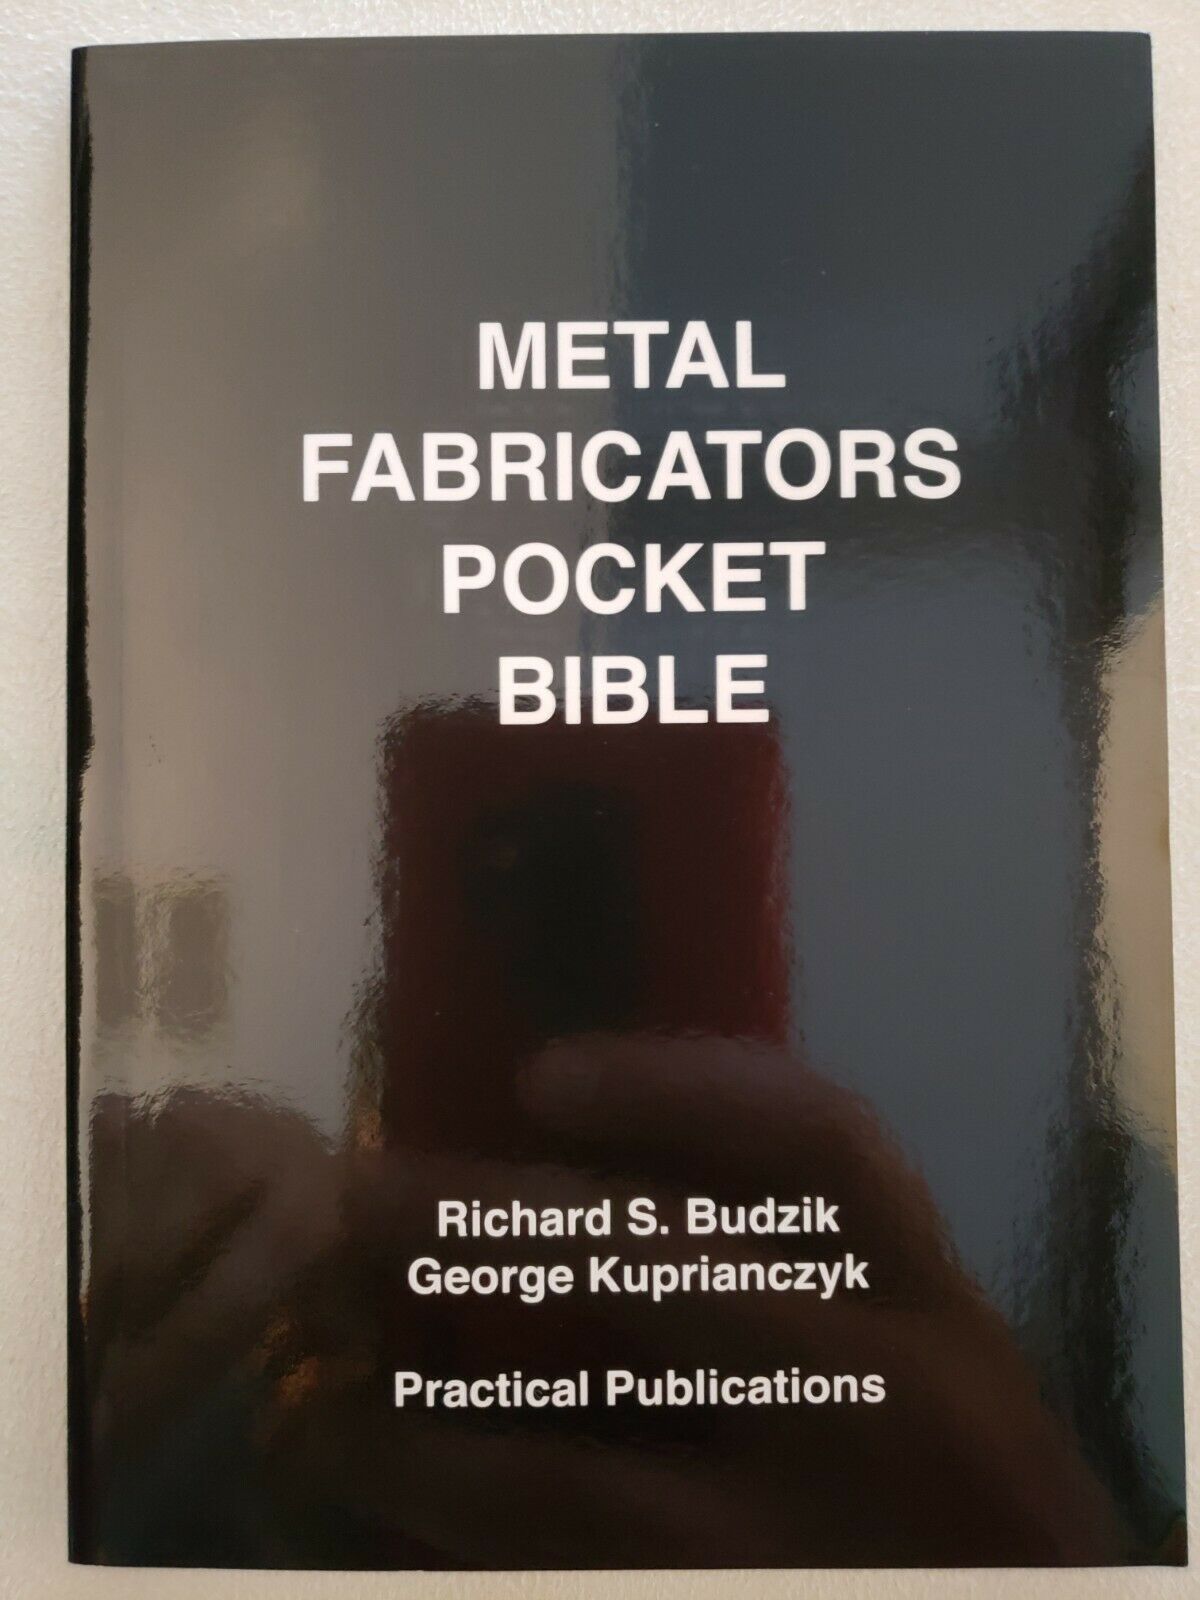 Metal Fabricators Pocket Bible by Richard S. Budzik & George Kuprianczyk